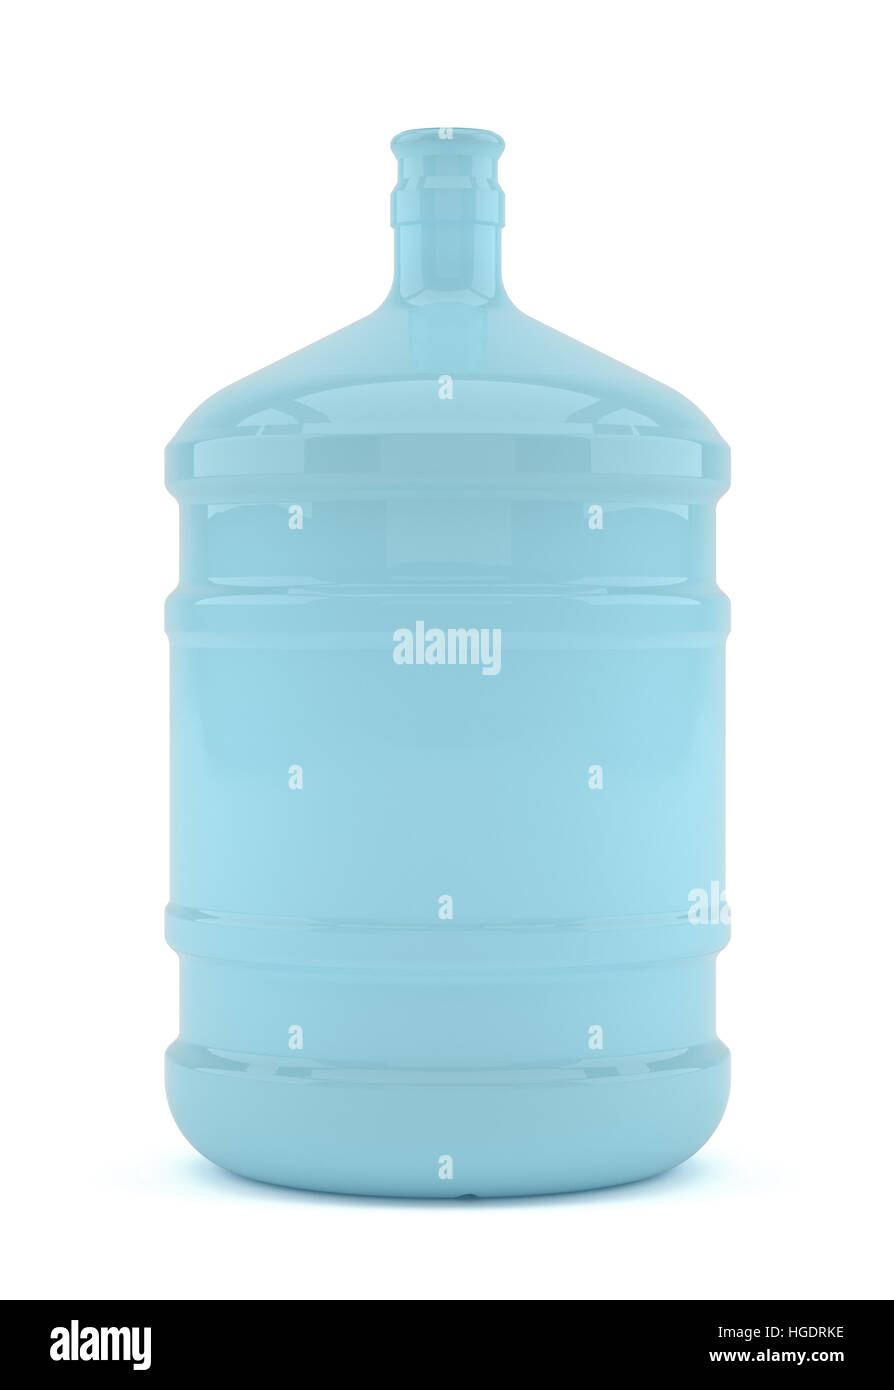 https://c8.alamy.com/comp/HGDRKE/big-bottle-of-water-isolated-on-a-white-background-HGDRKE.jpg